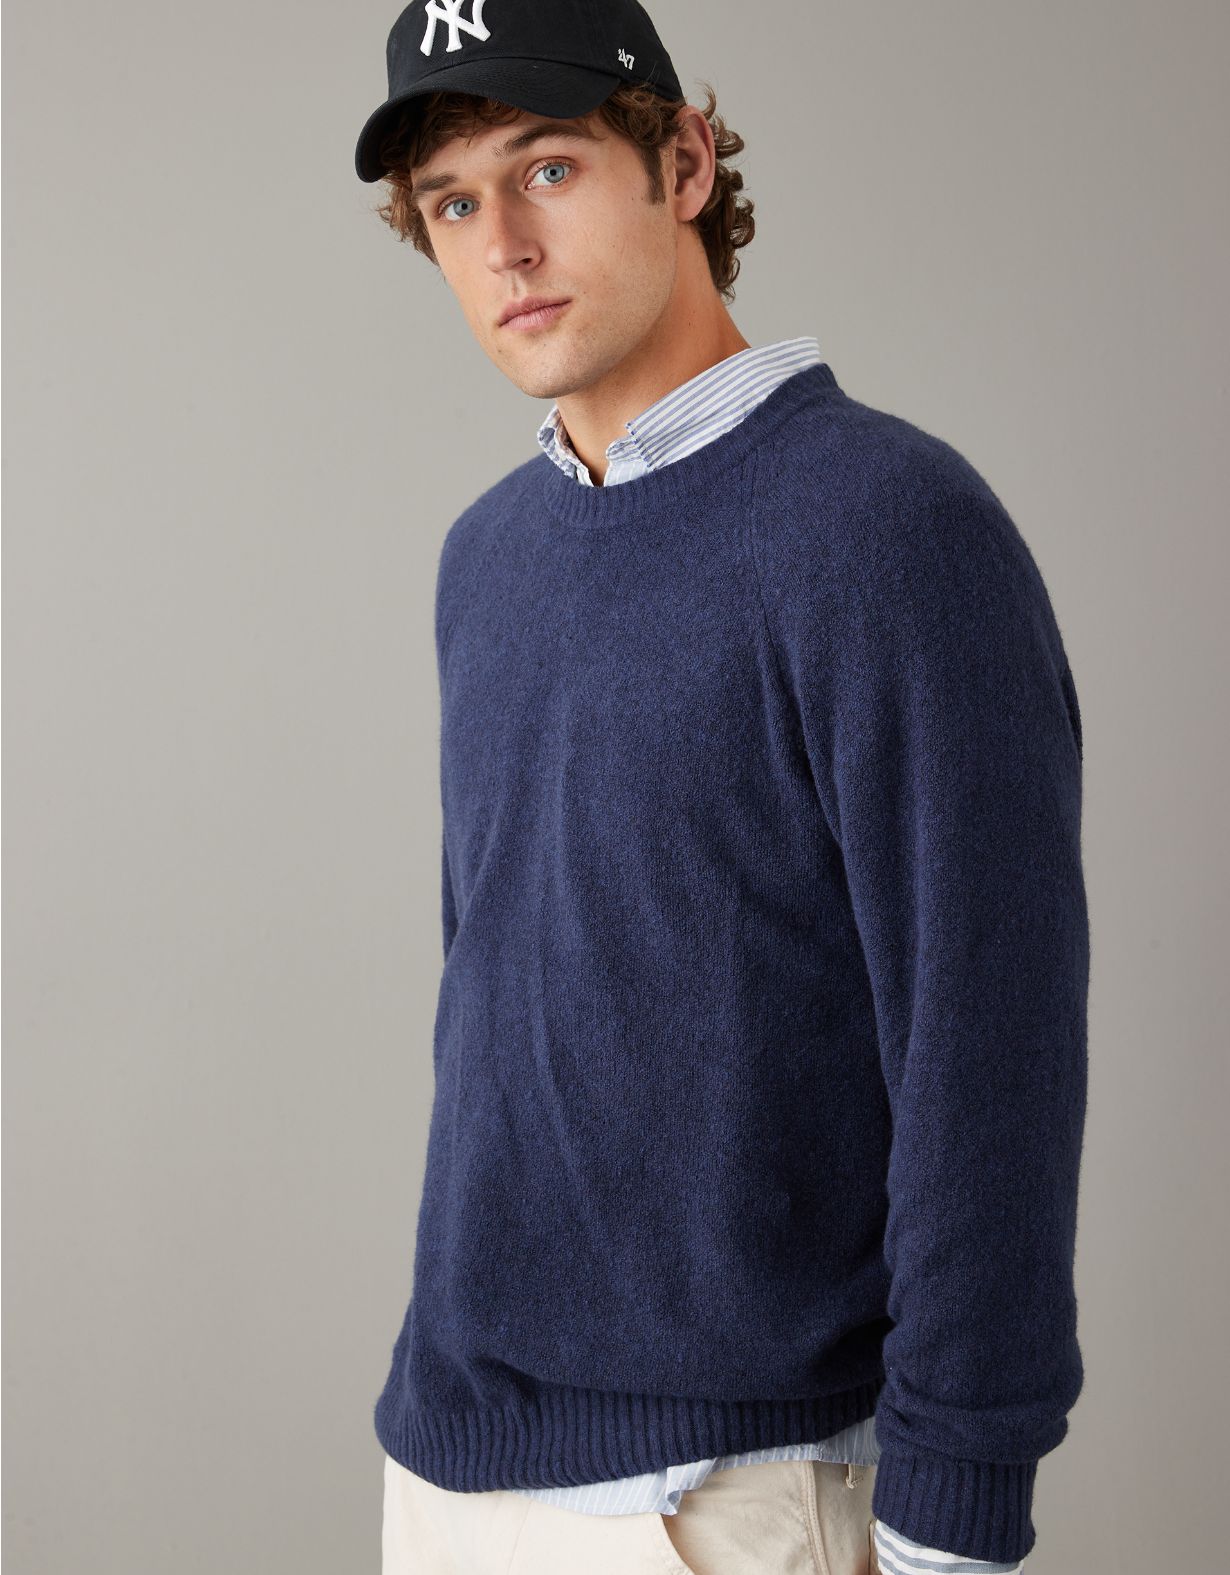 AE Crewneck Sweater